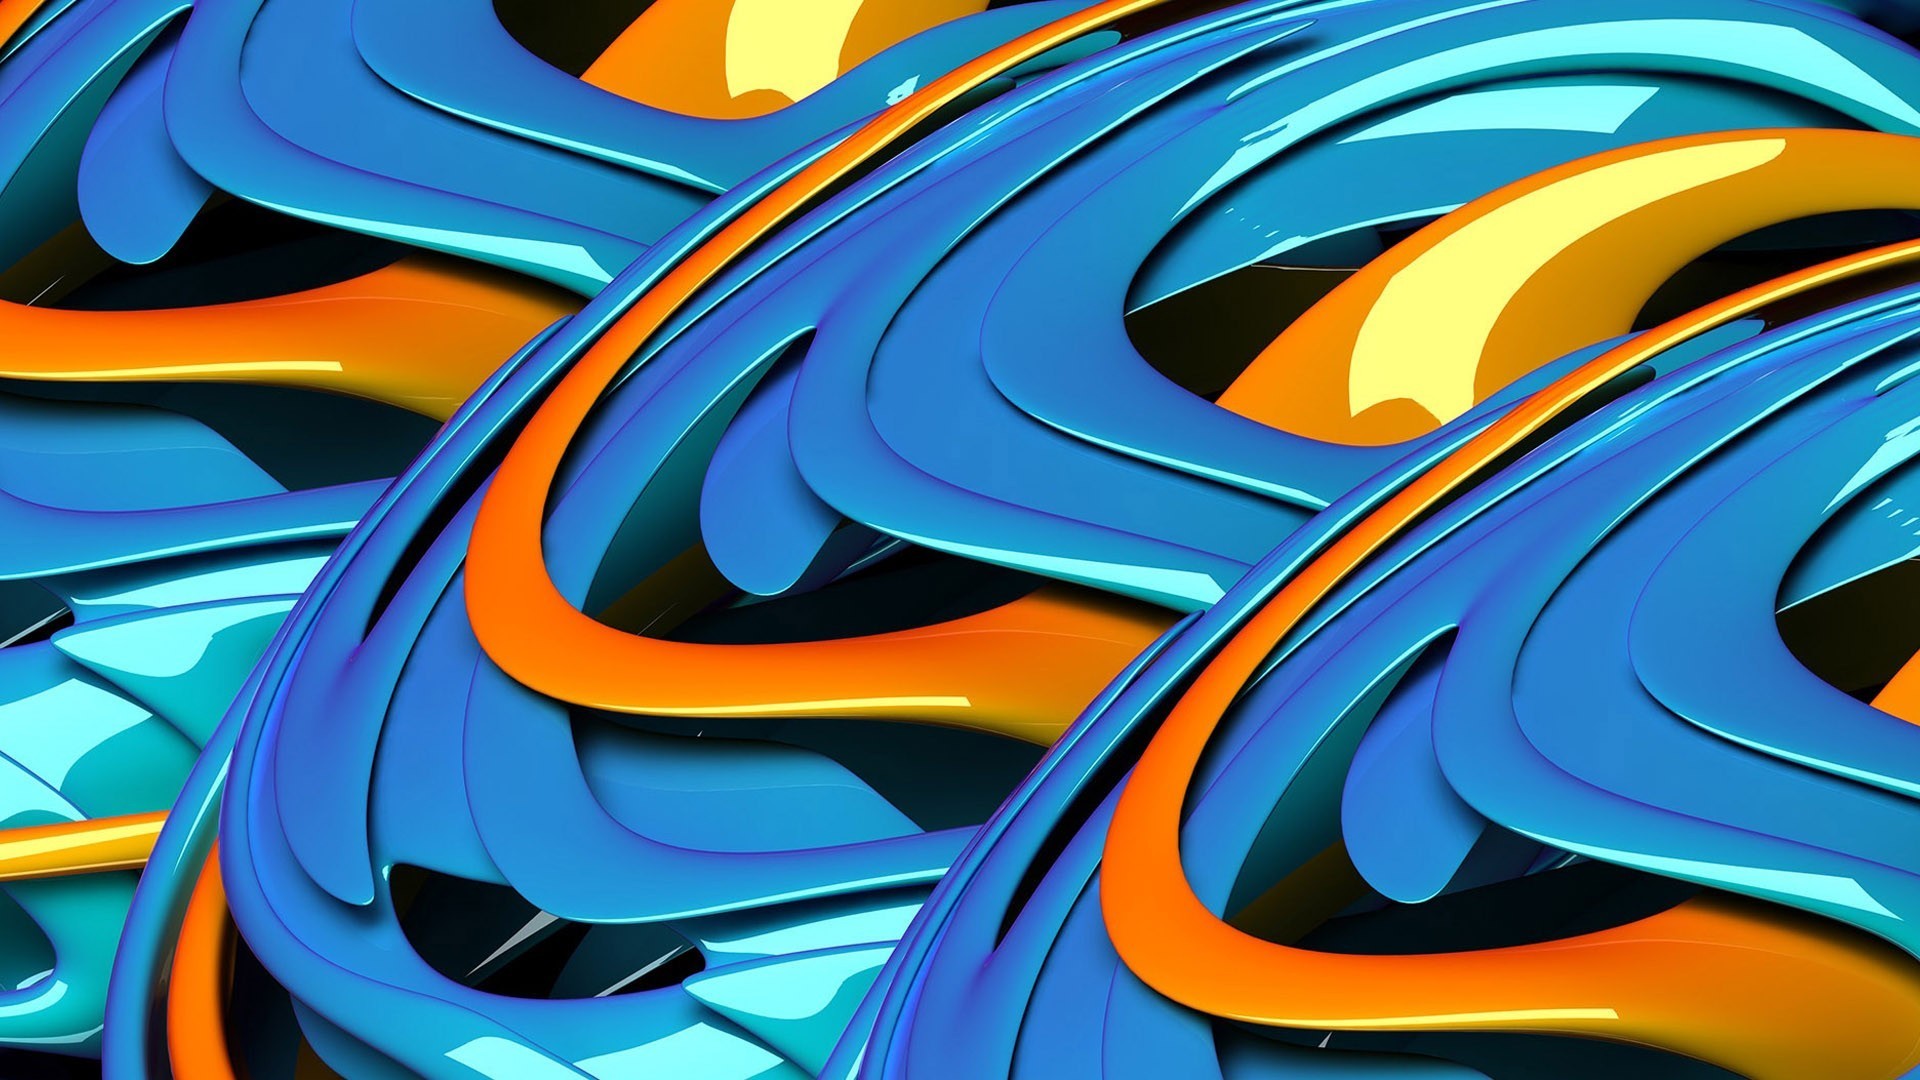 1920x1080 Blue And Orange Waves HD Wallpaper Free - Download Blue And Orange Waves HD  Wallpaper